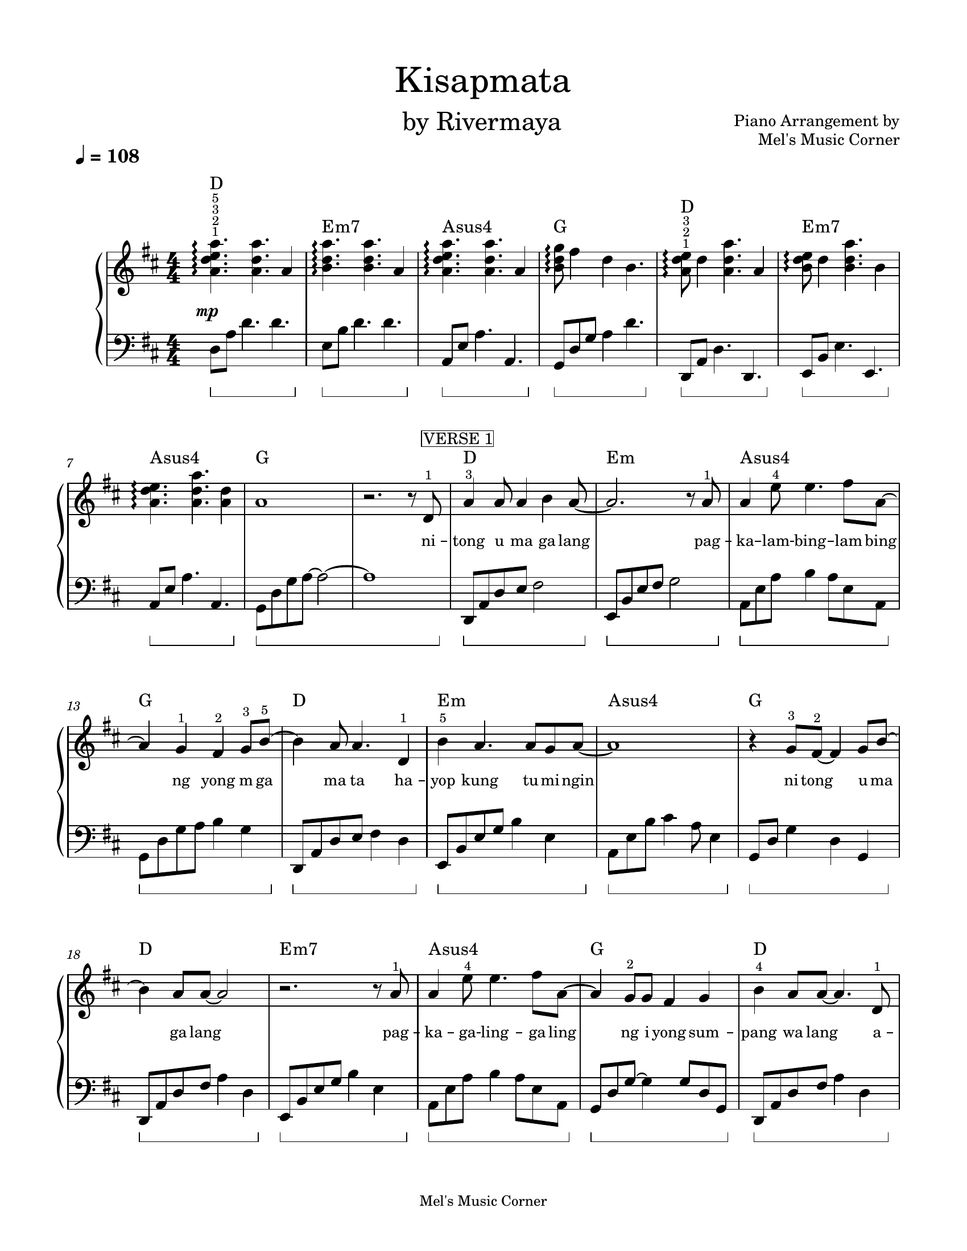 Rivermaya - Kisapmata (piano sheet music) by Mel's Music Corner